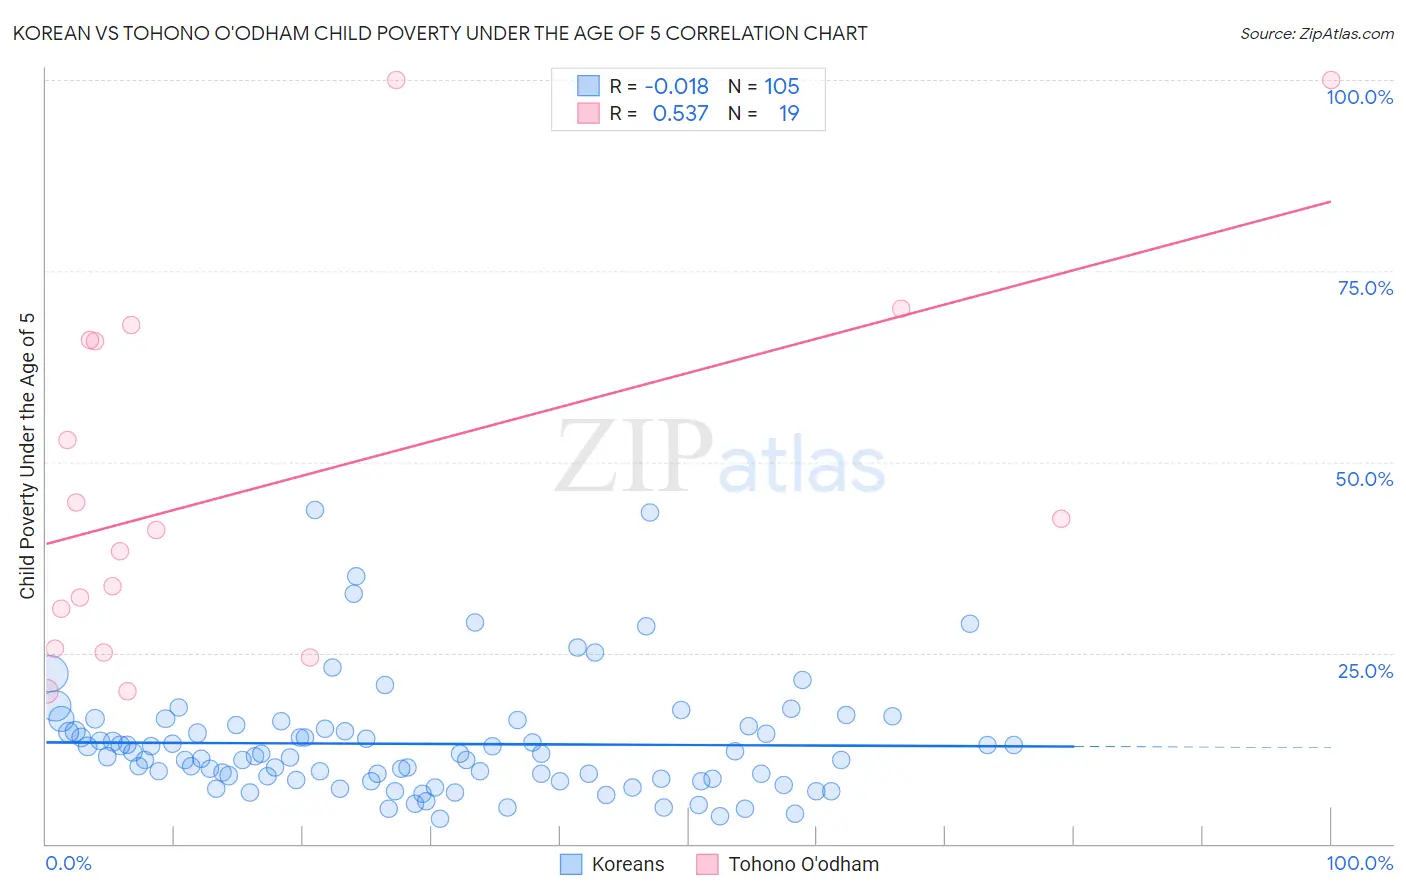 Korean vs Tohono O'odham Child Poverty Under the Age of 5